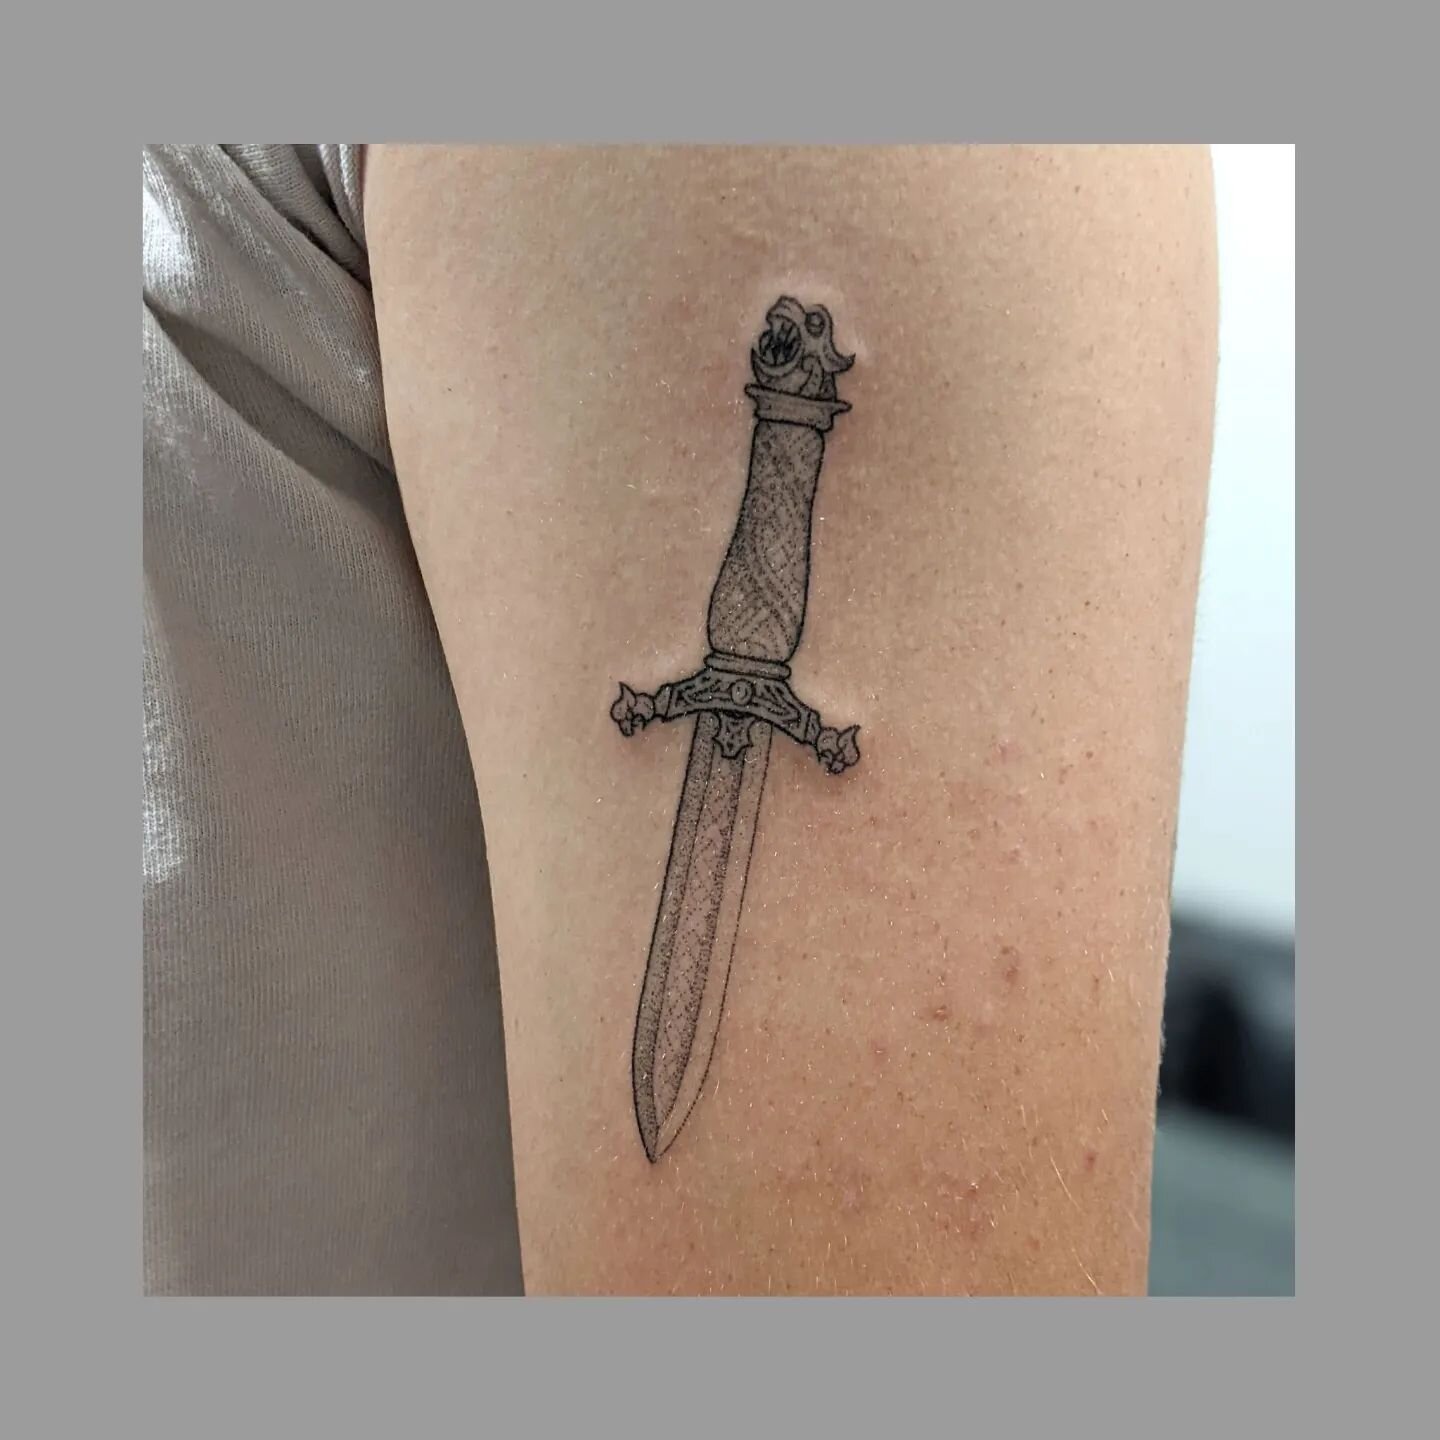 Special family heirloom dagger for Noah